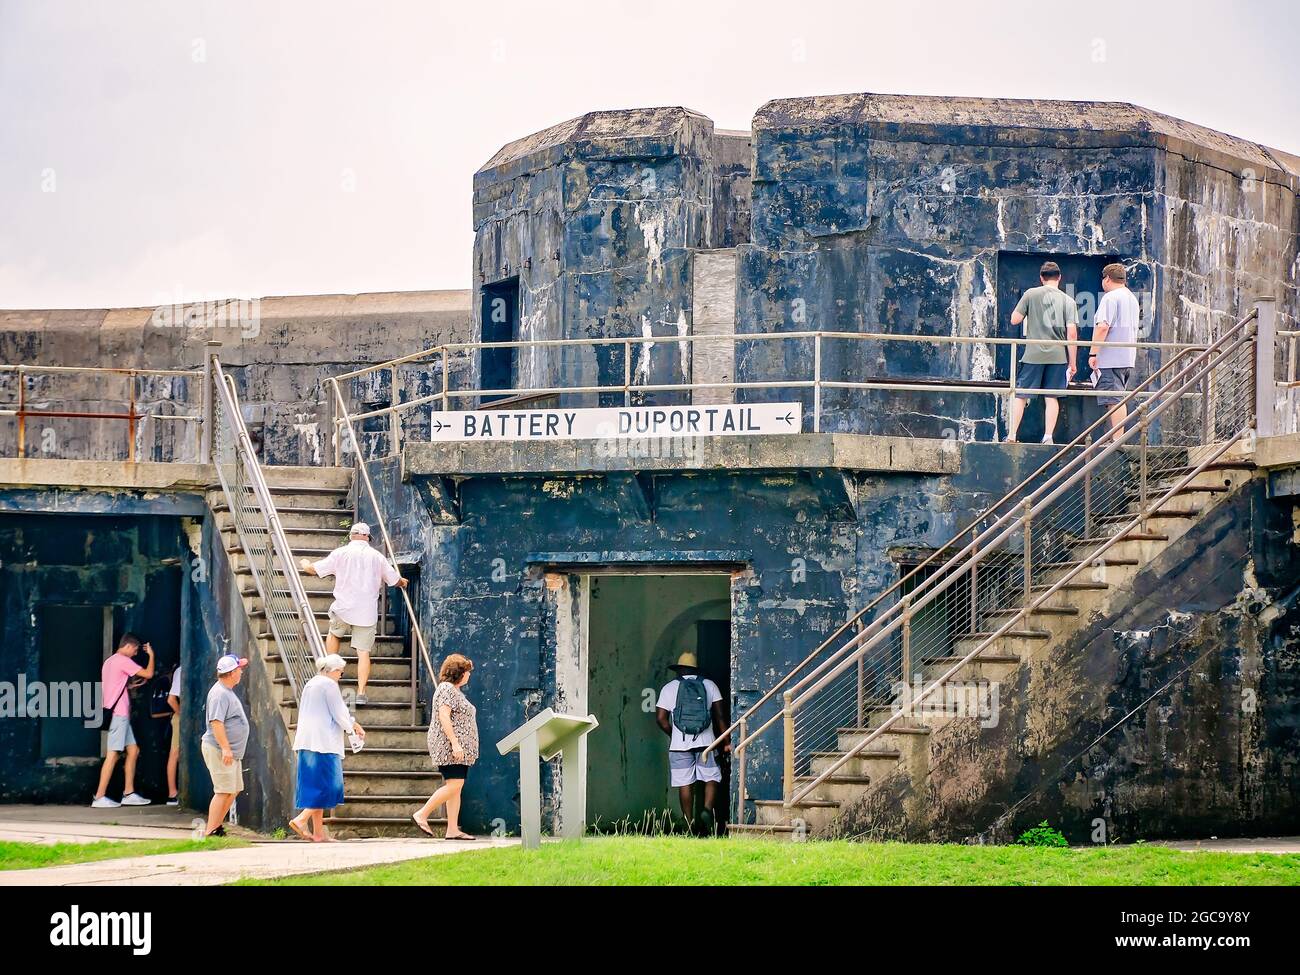 Visitors explore Battery Duportail at Fort Morgan, July 31, 2021, in Gulf Shores, Alabama. Stock Photo